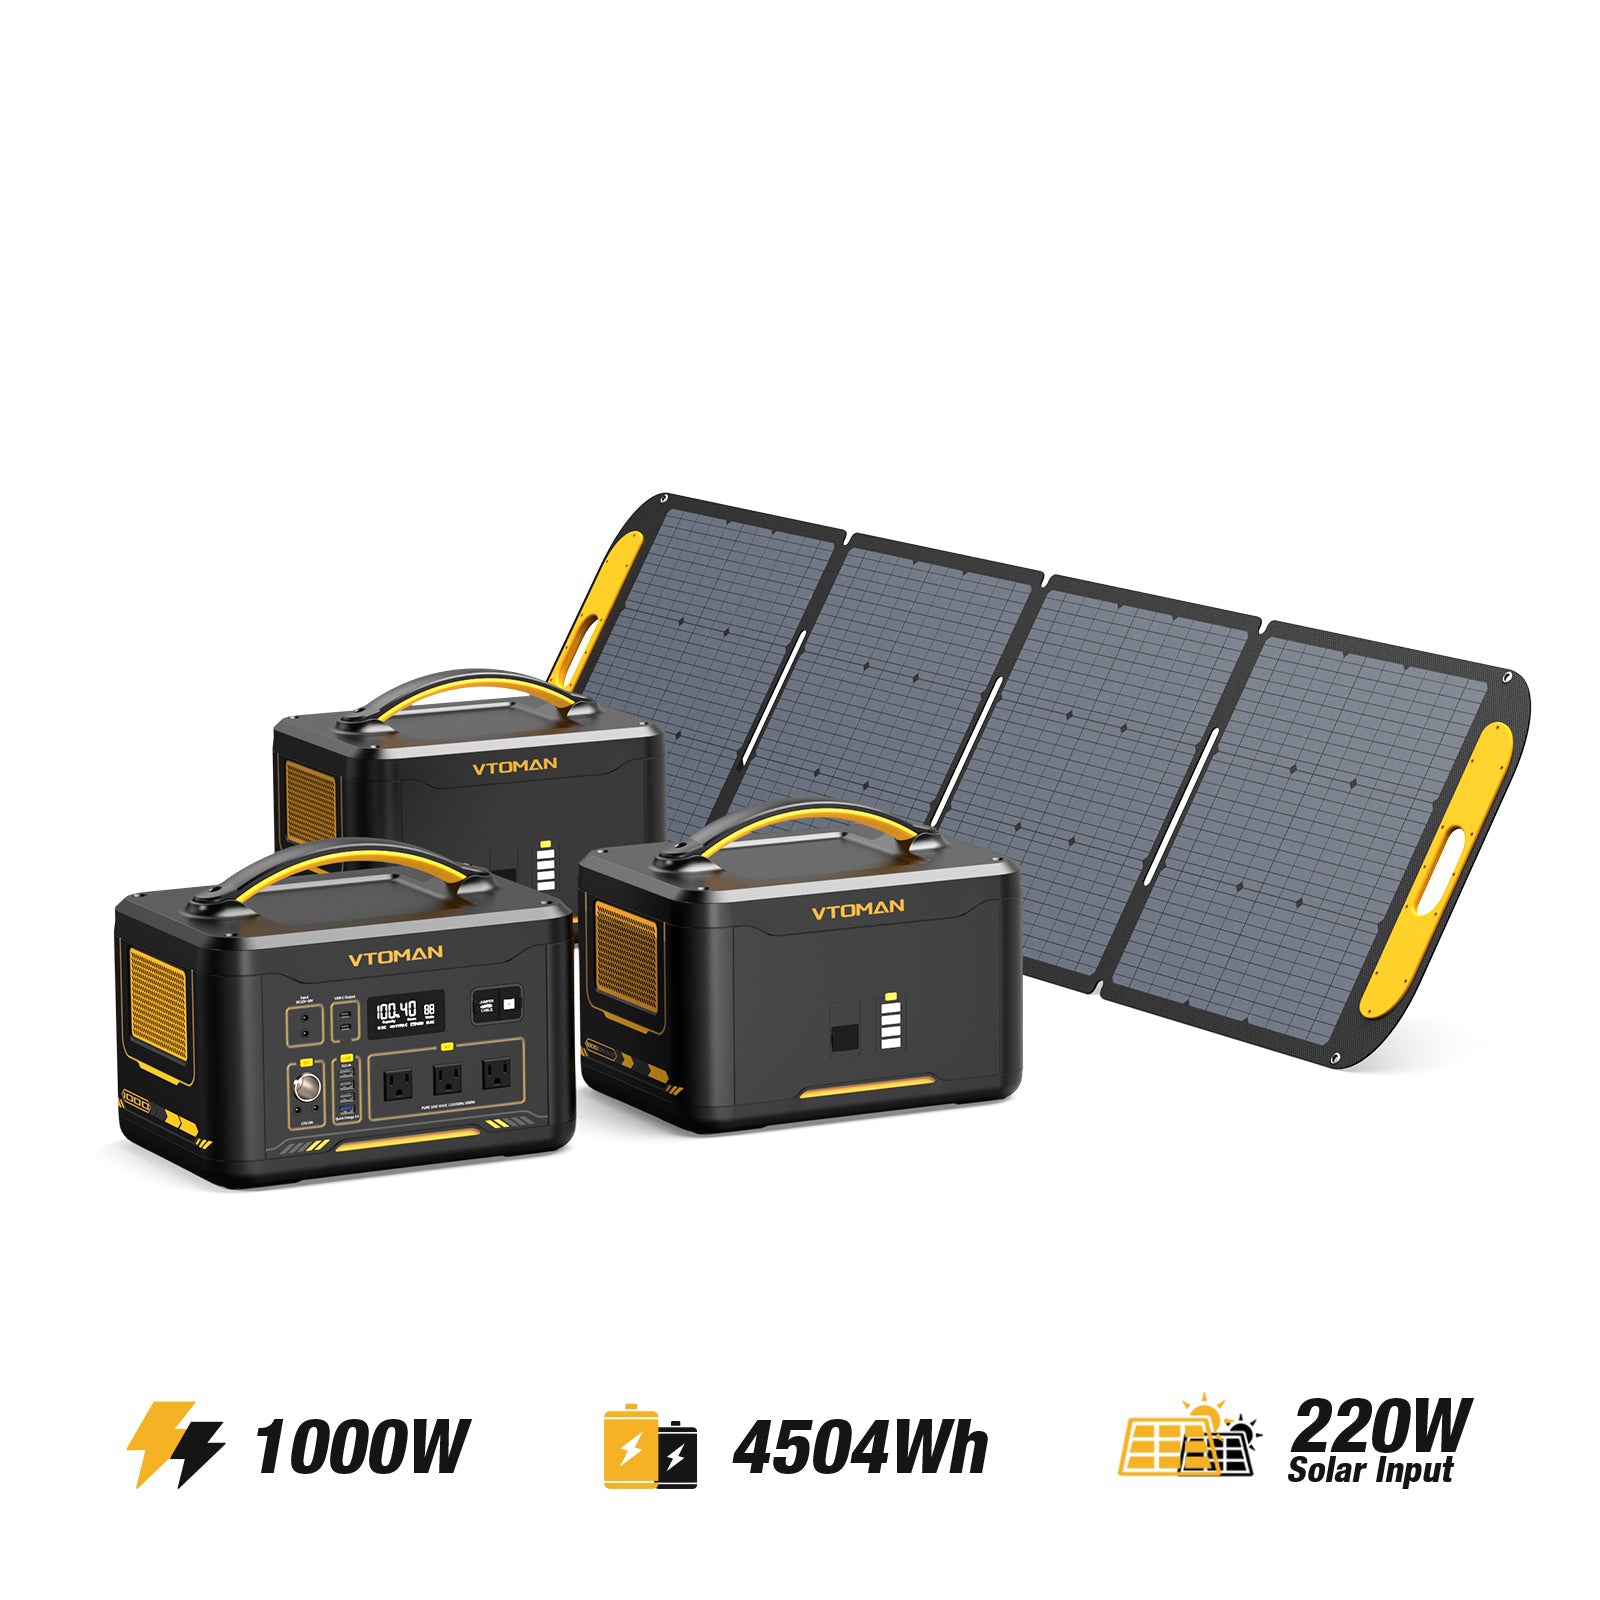 vtoman jump 1000W/4504Wh 220W solar Generator